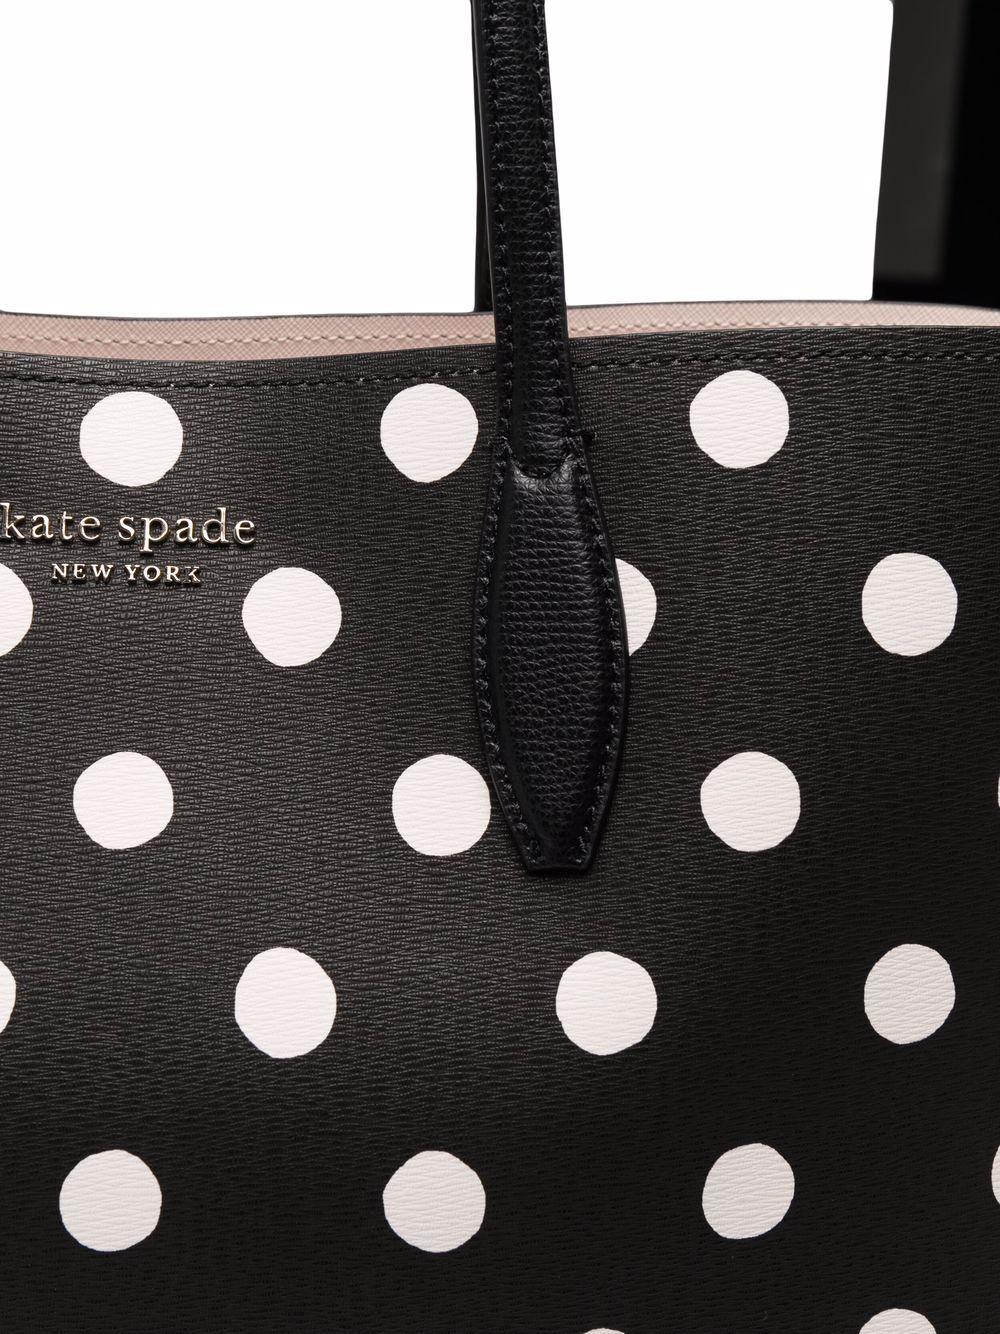 kate spade | Bags | Kate Spade Natalia Square Embroidered Polka Dot  Crossbody Handbag | Poshmark